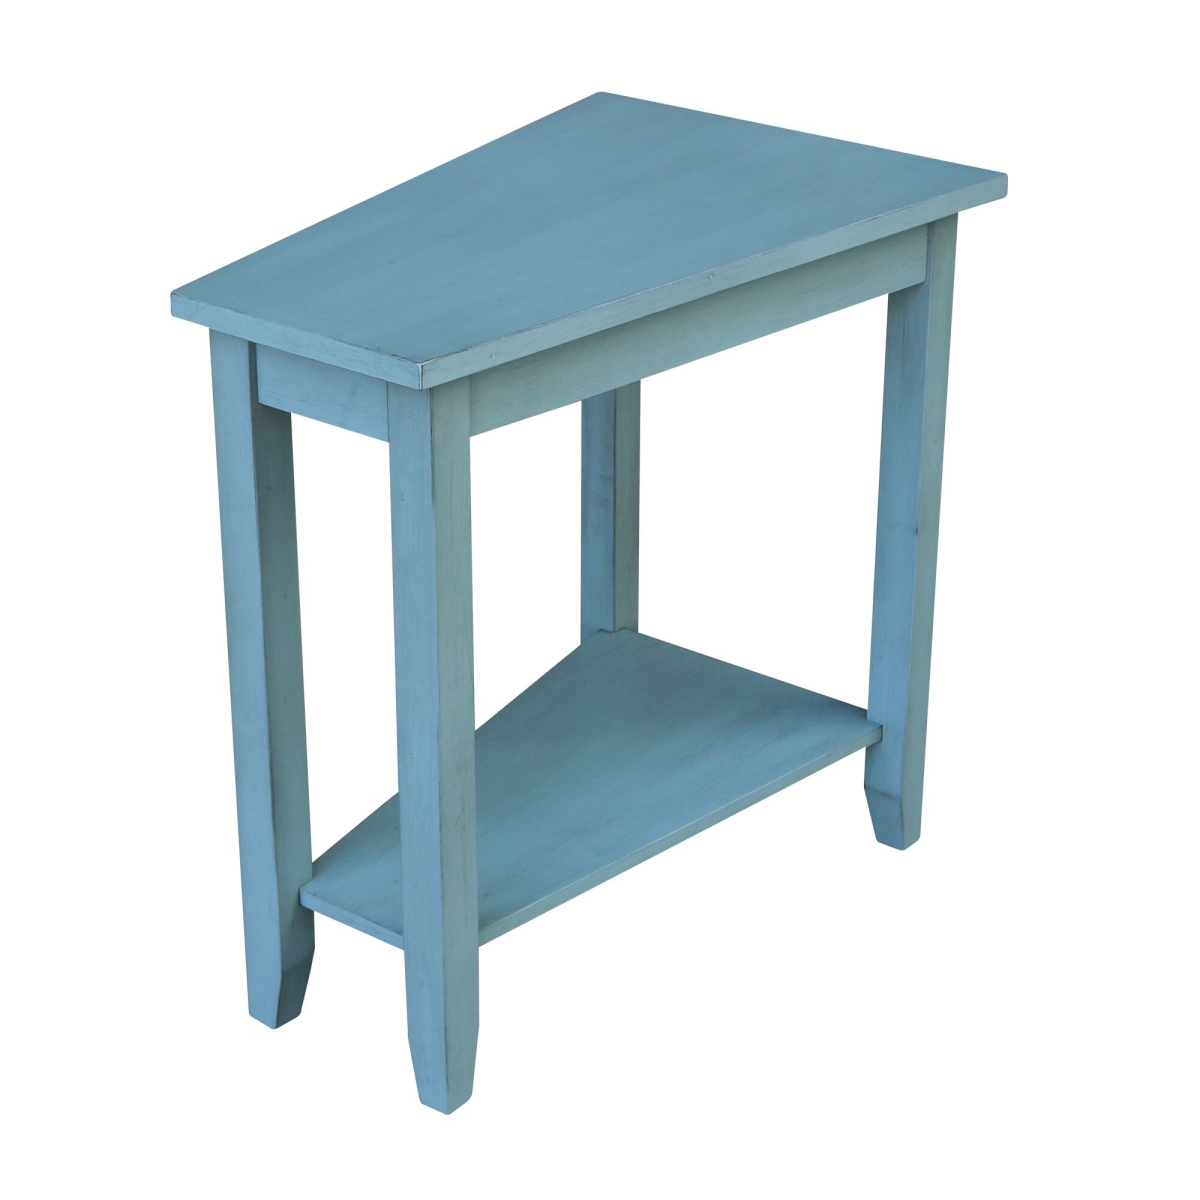 Ot32-45 Keystone Accent Table, Ocean Blue - Antique Rubbed